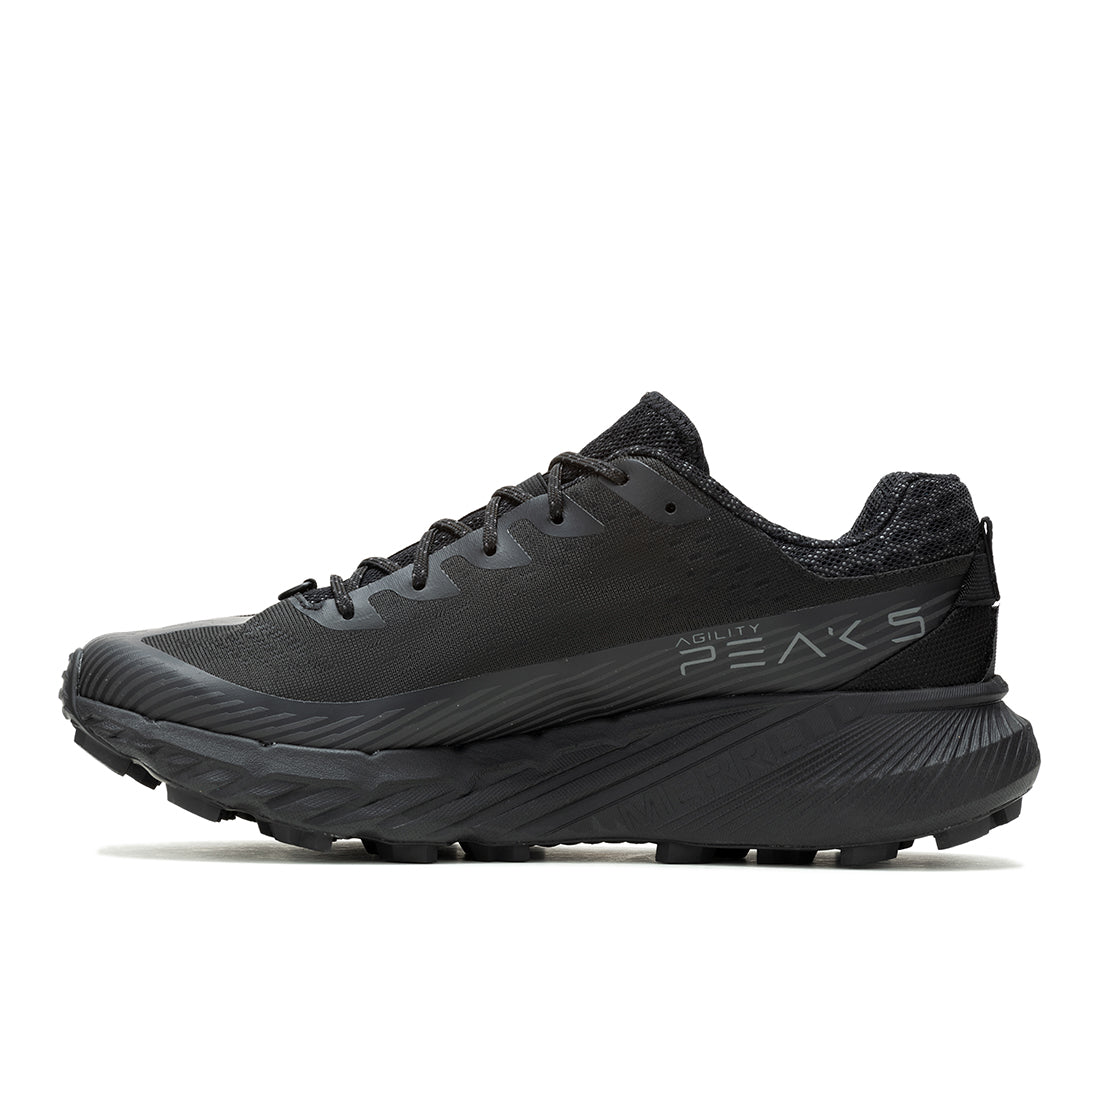 Agility Peak 5 – Black/Black Mens Trail Running Shoes - 0